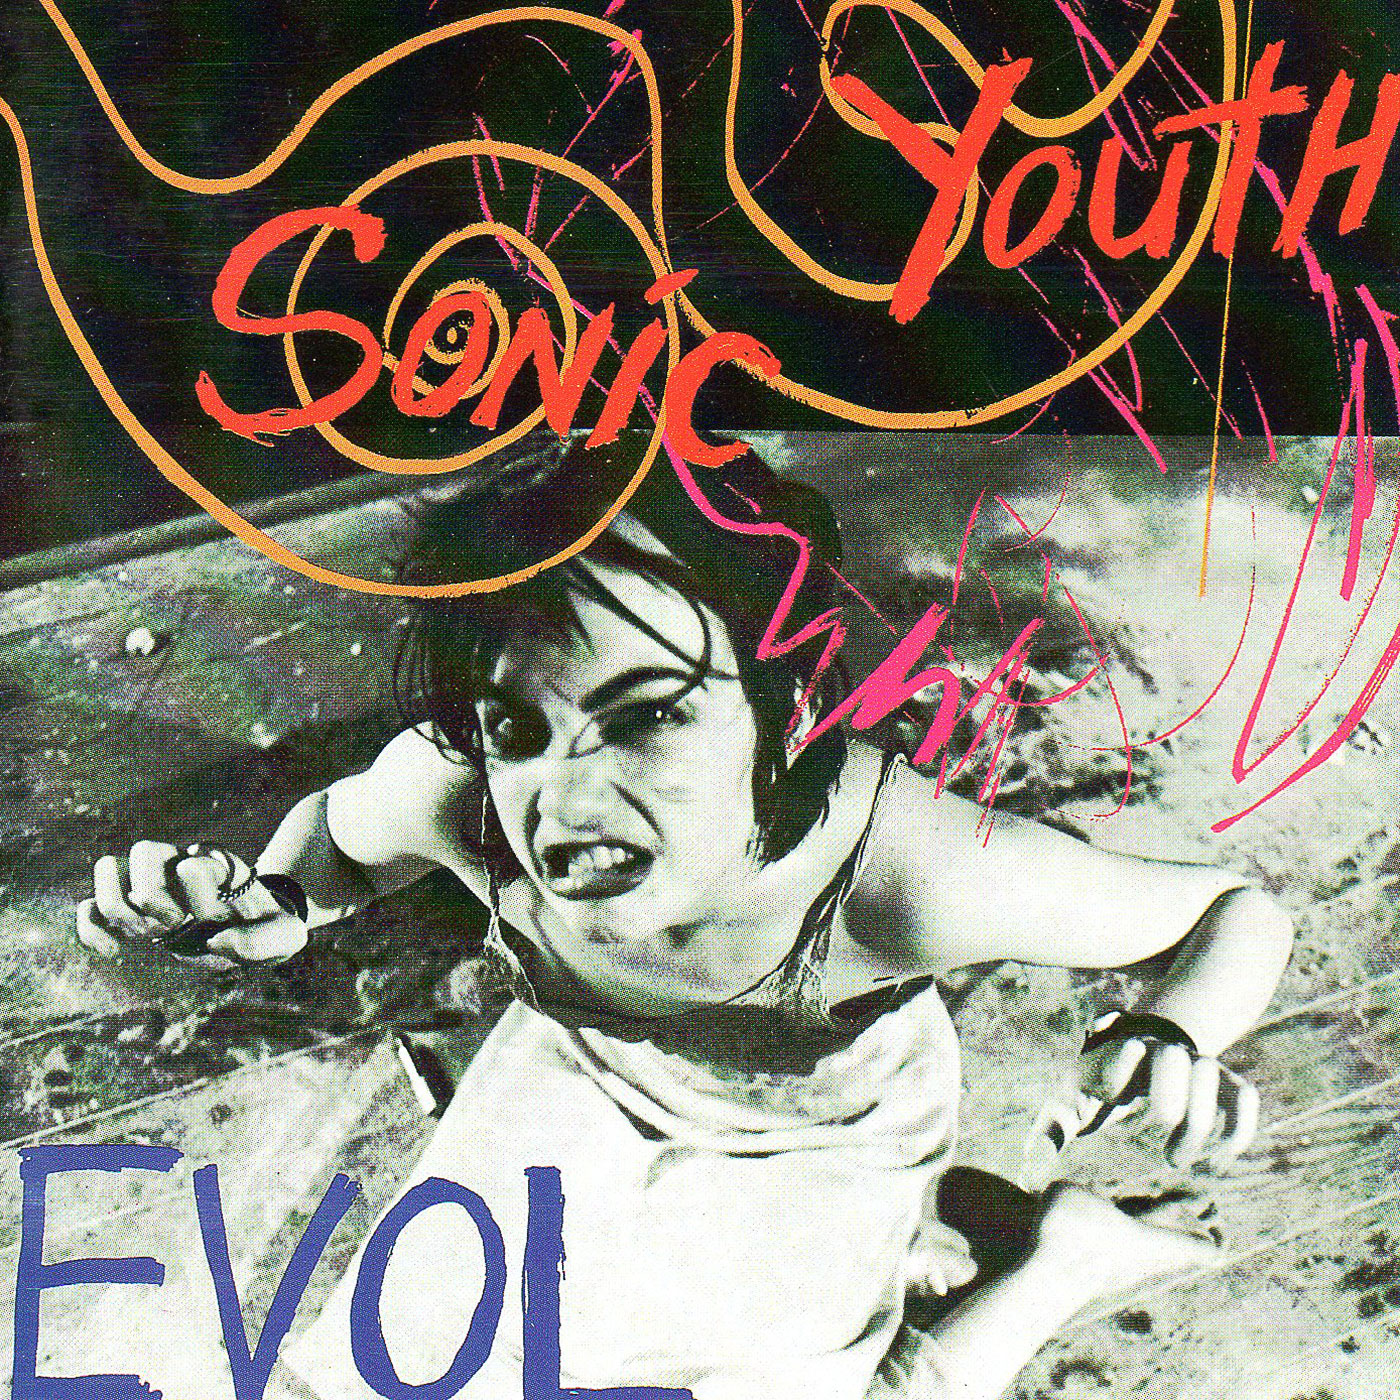 575 Sonic Youth – EVOL